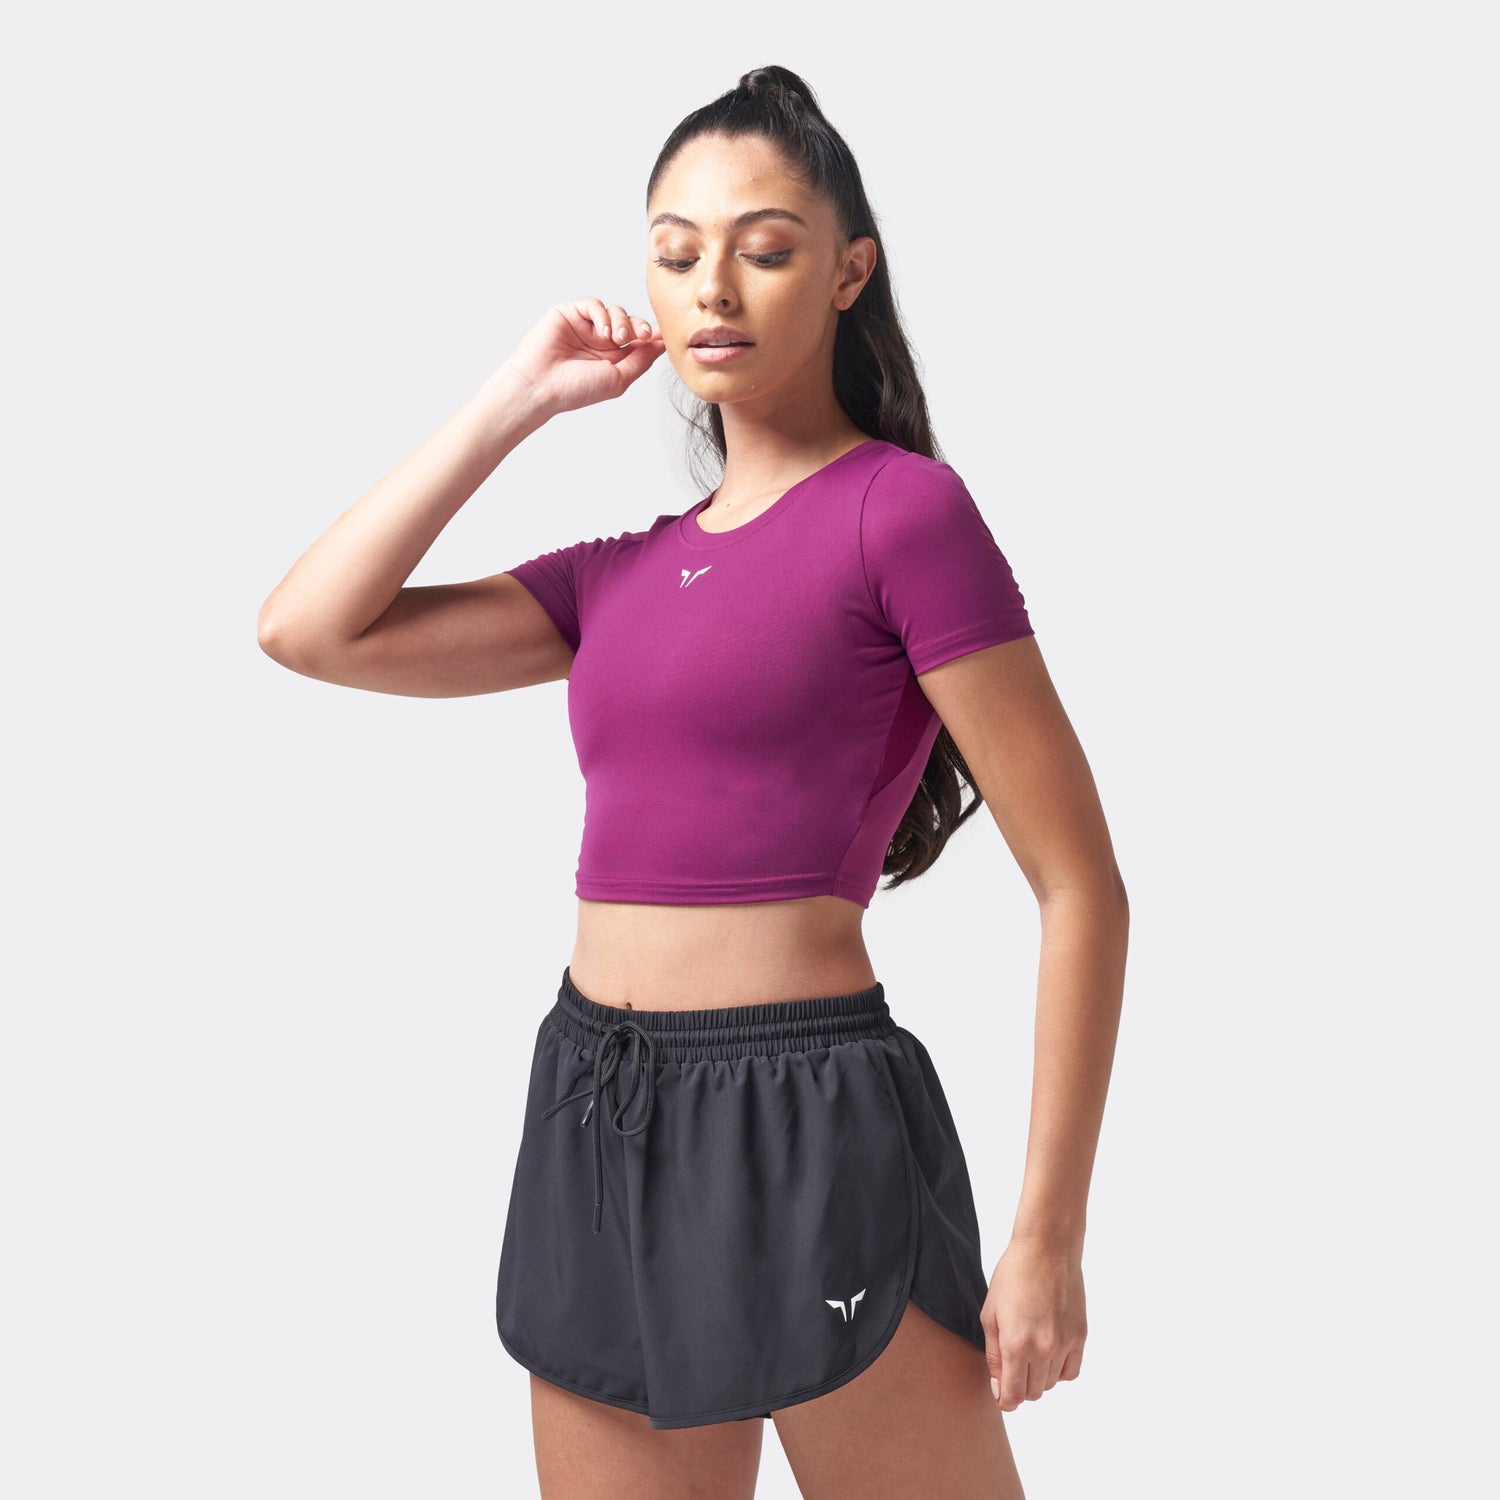 squatwolf-gym-wear-essential-cropped-tee-dark-purple-workout-tee-for-women